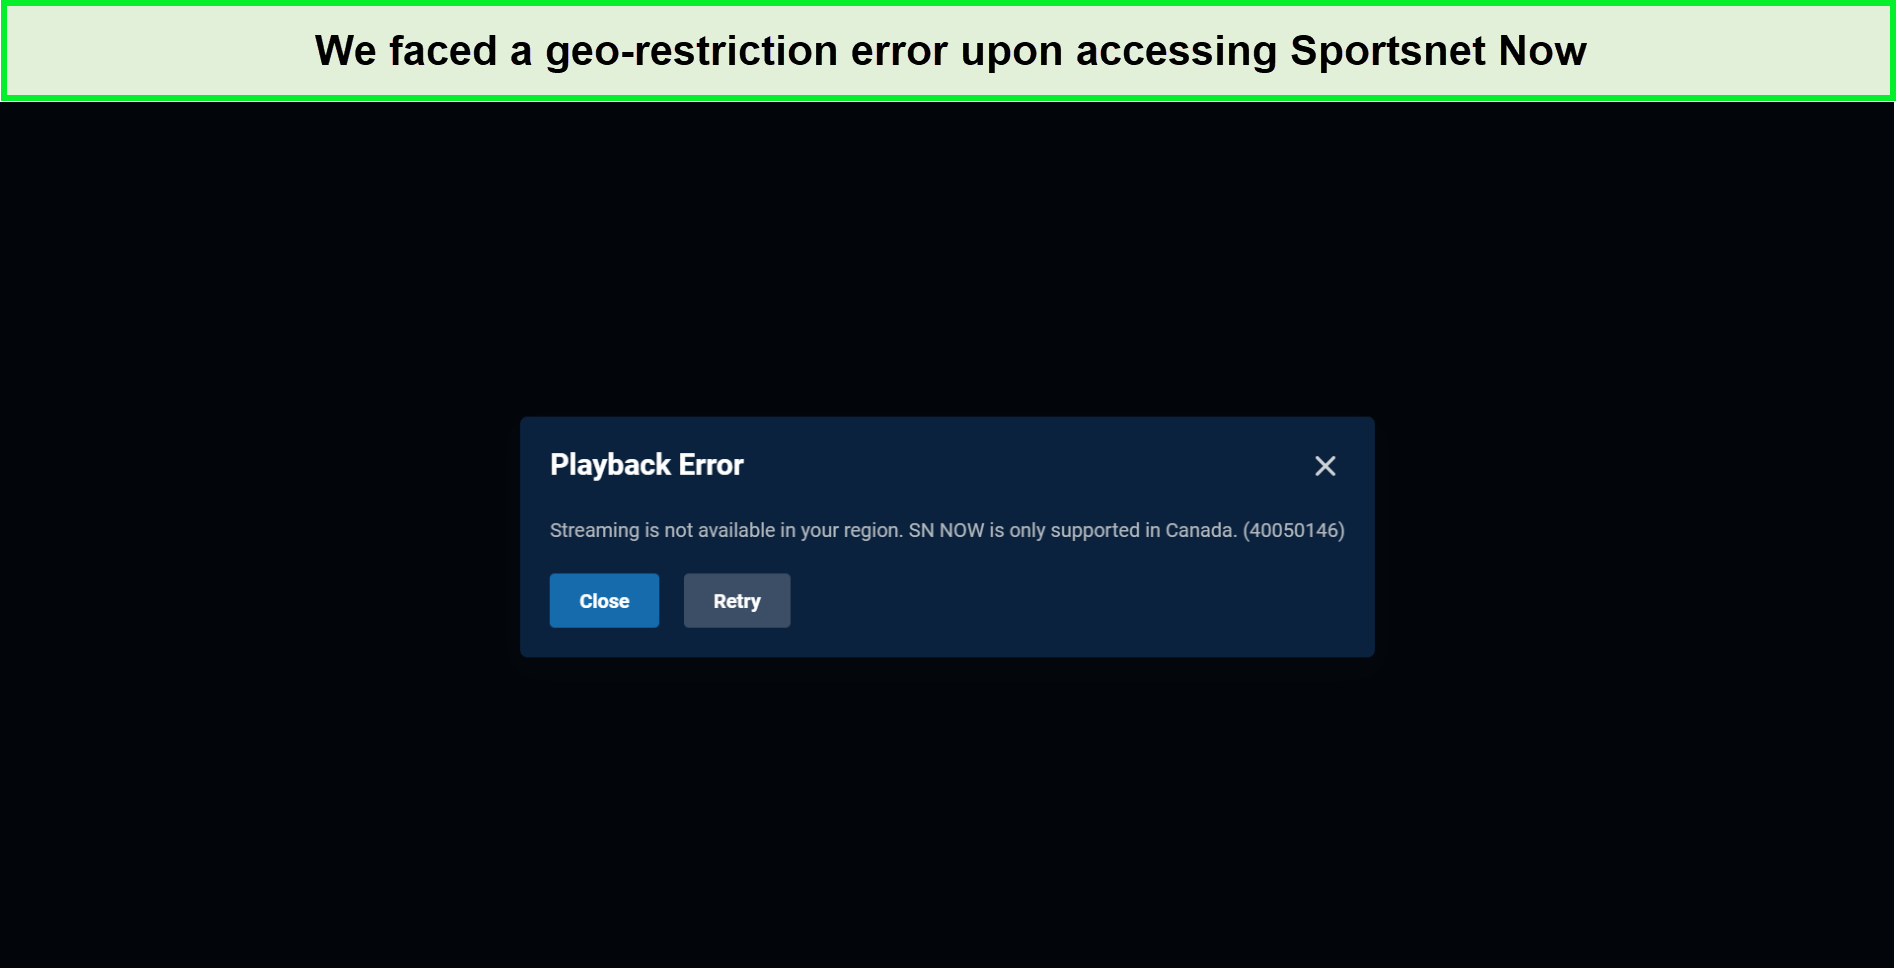 sportsnet-now-in-Hong Kong-geo-restriction-error